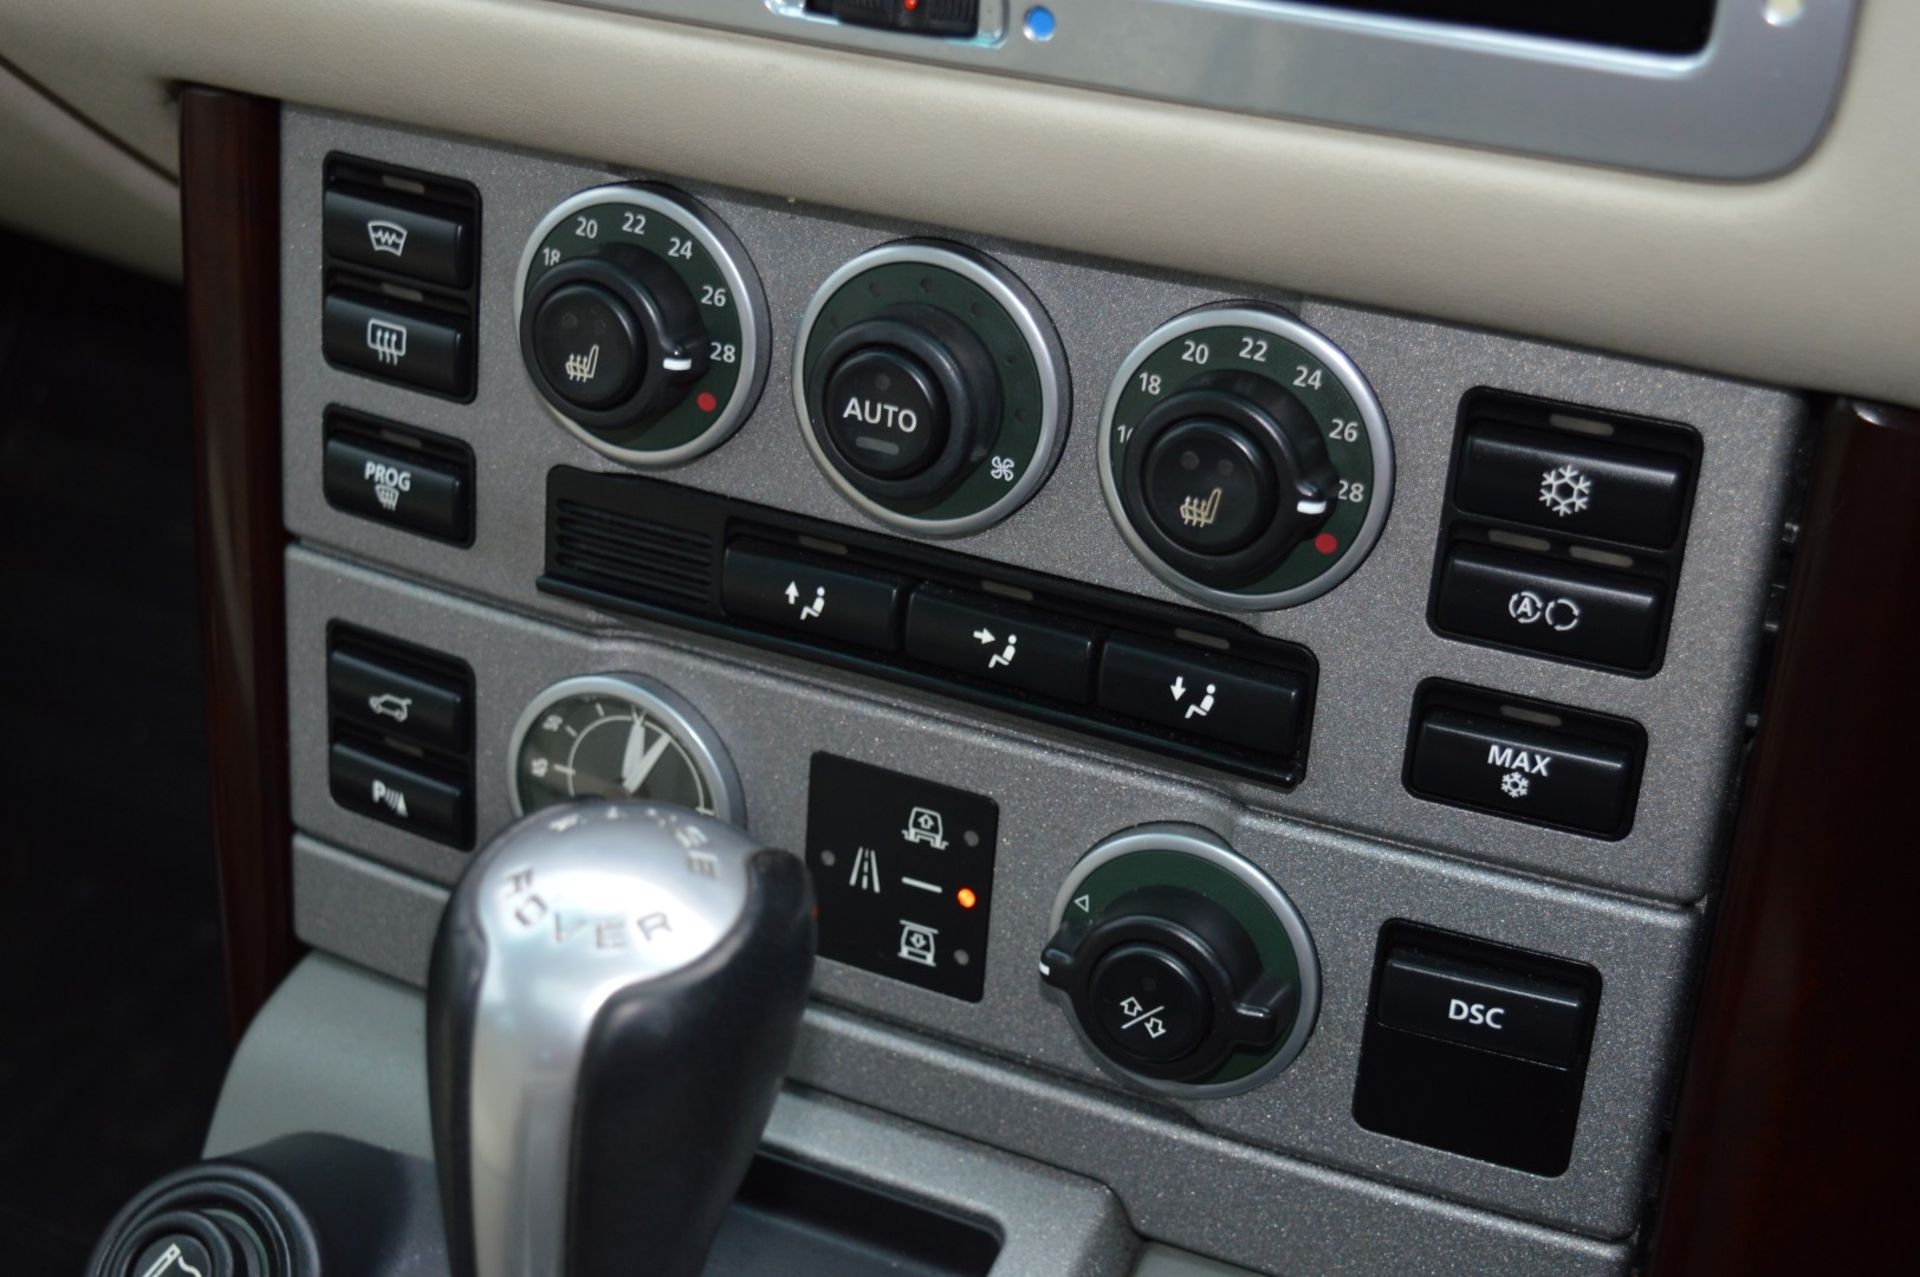 1 x Range Rover Vogue V8 4.4 Automatic - Black, Leather Interior, Petrol, Television, Premium - Image 28 of 63